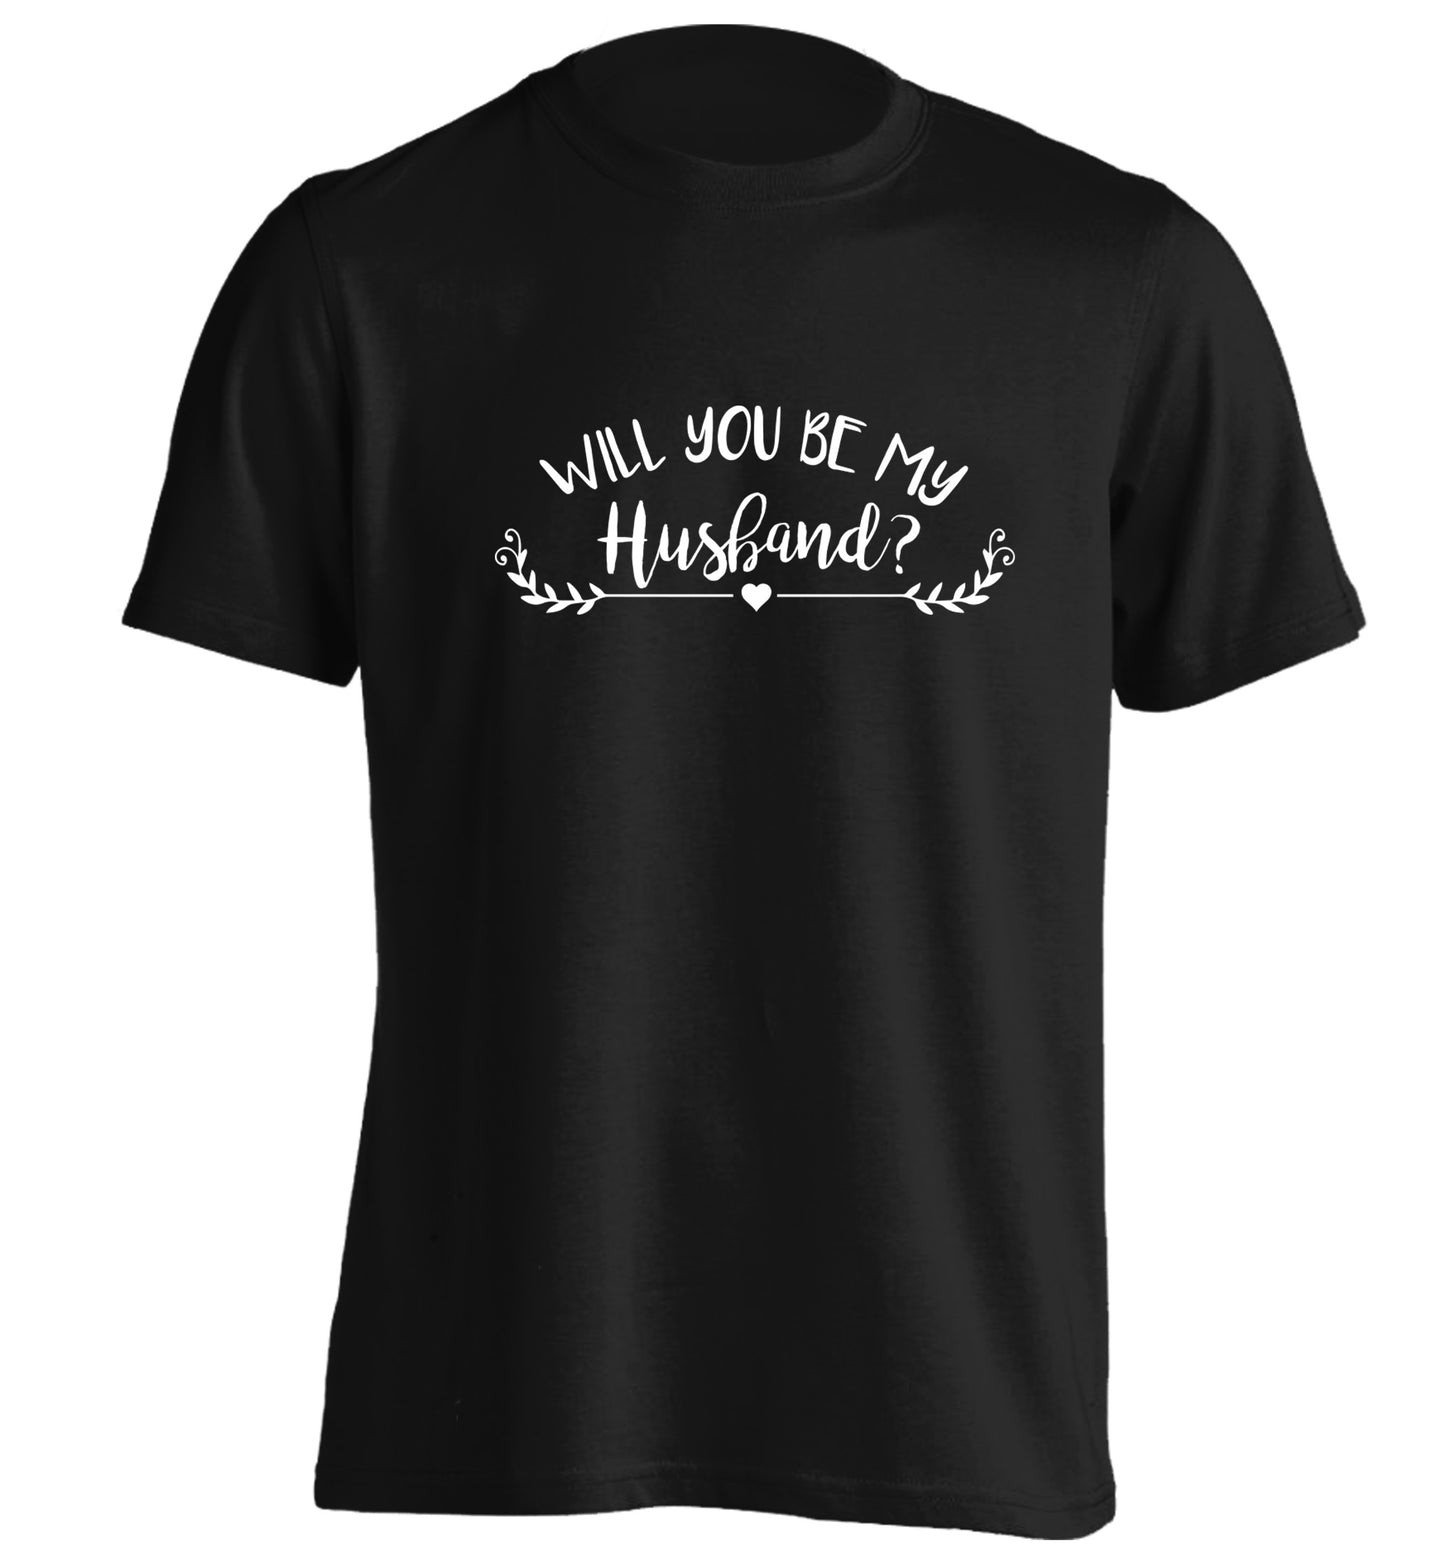 Will you be my husband? adults unisex black Tshirt 2XL